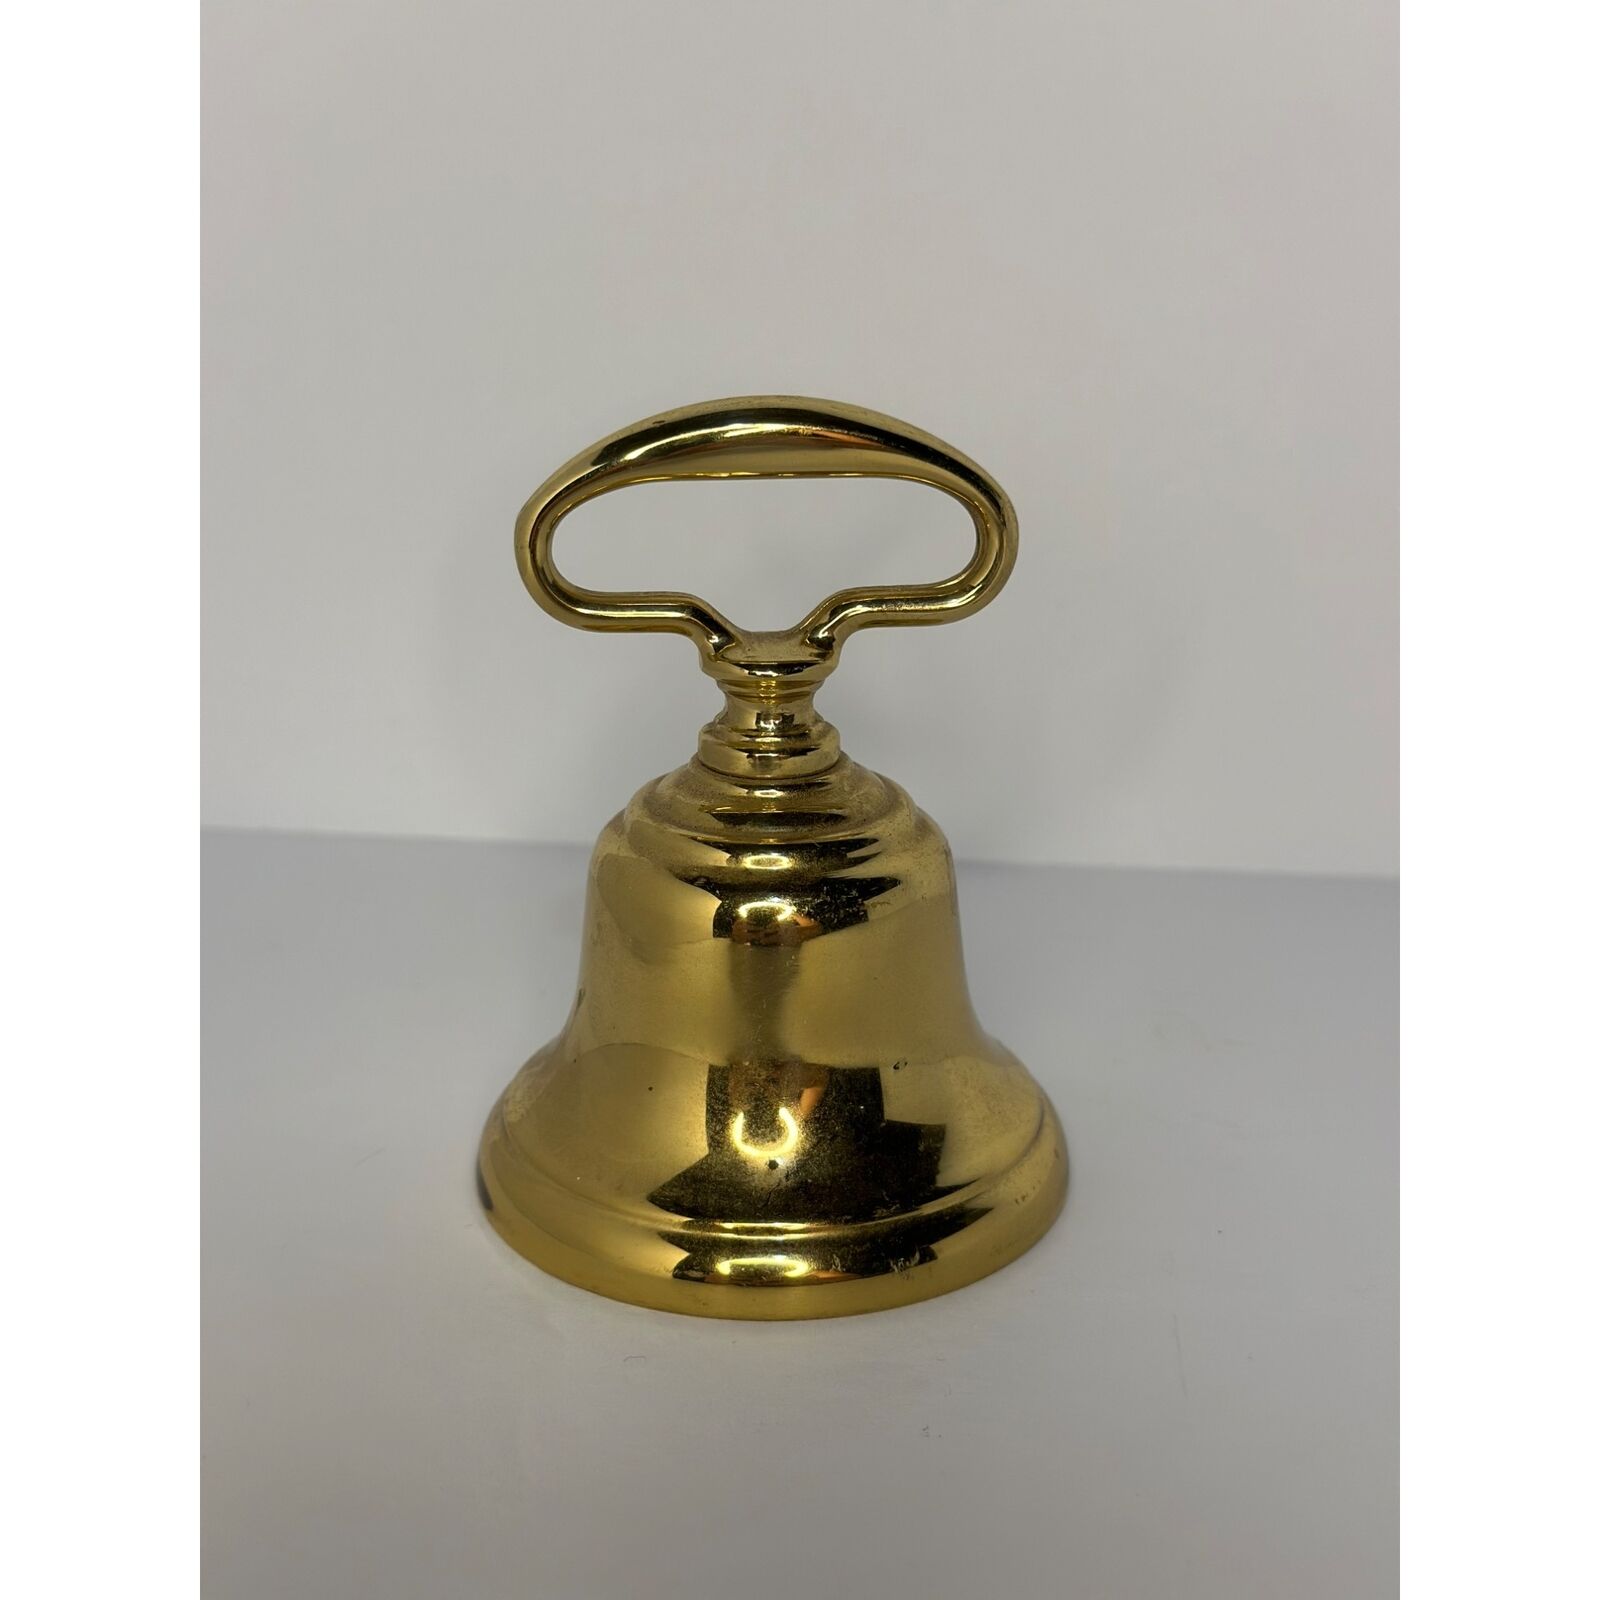 VTG Baldwin Brass Bell Classic Gold Finish Antique Decor Collectible Wedding